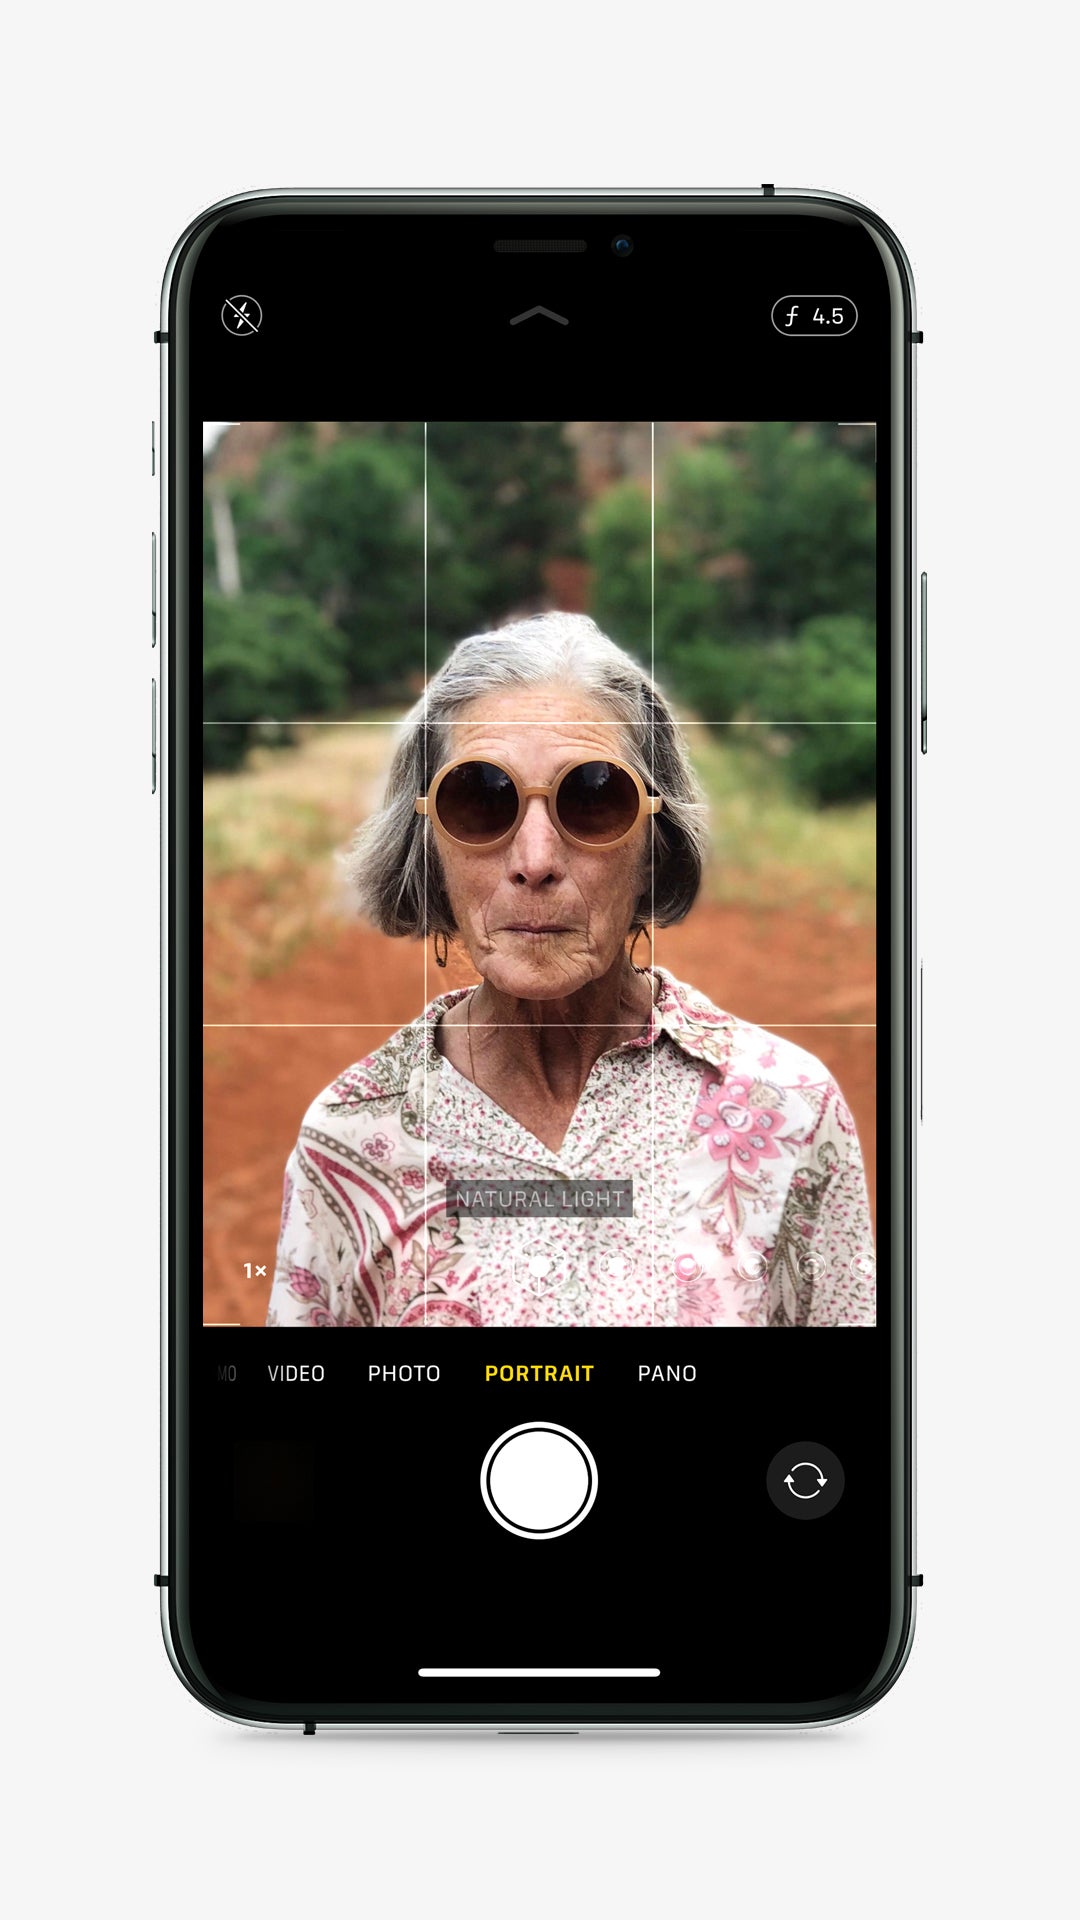 IPhone Portrait Mode